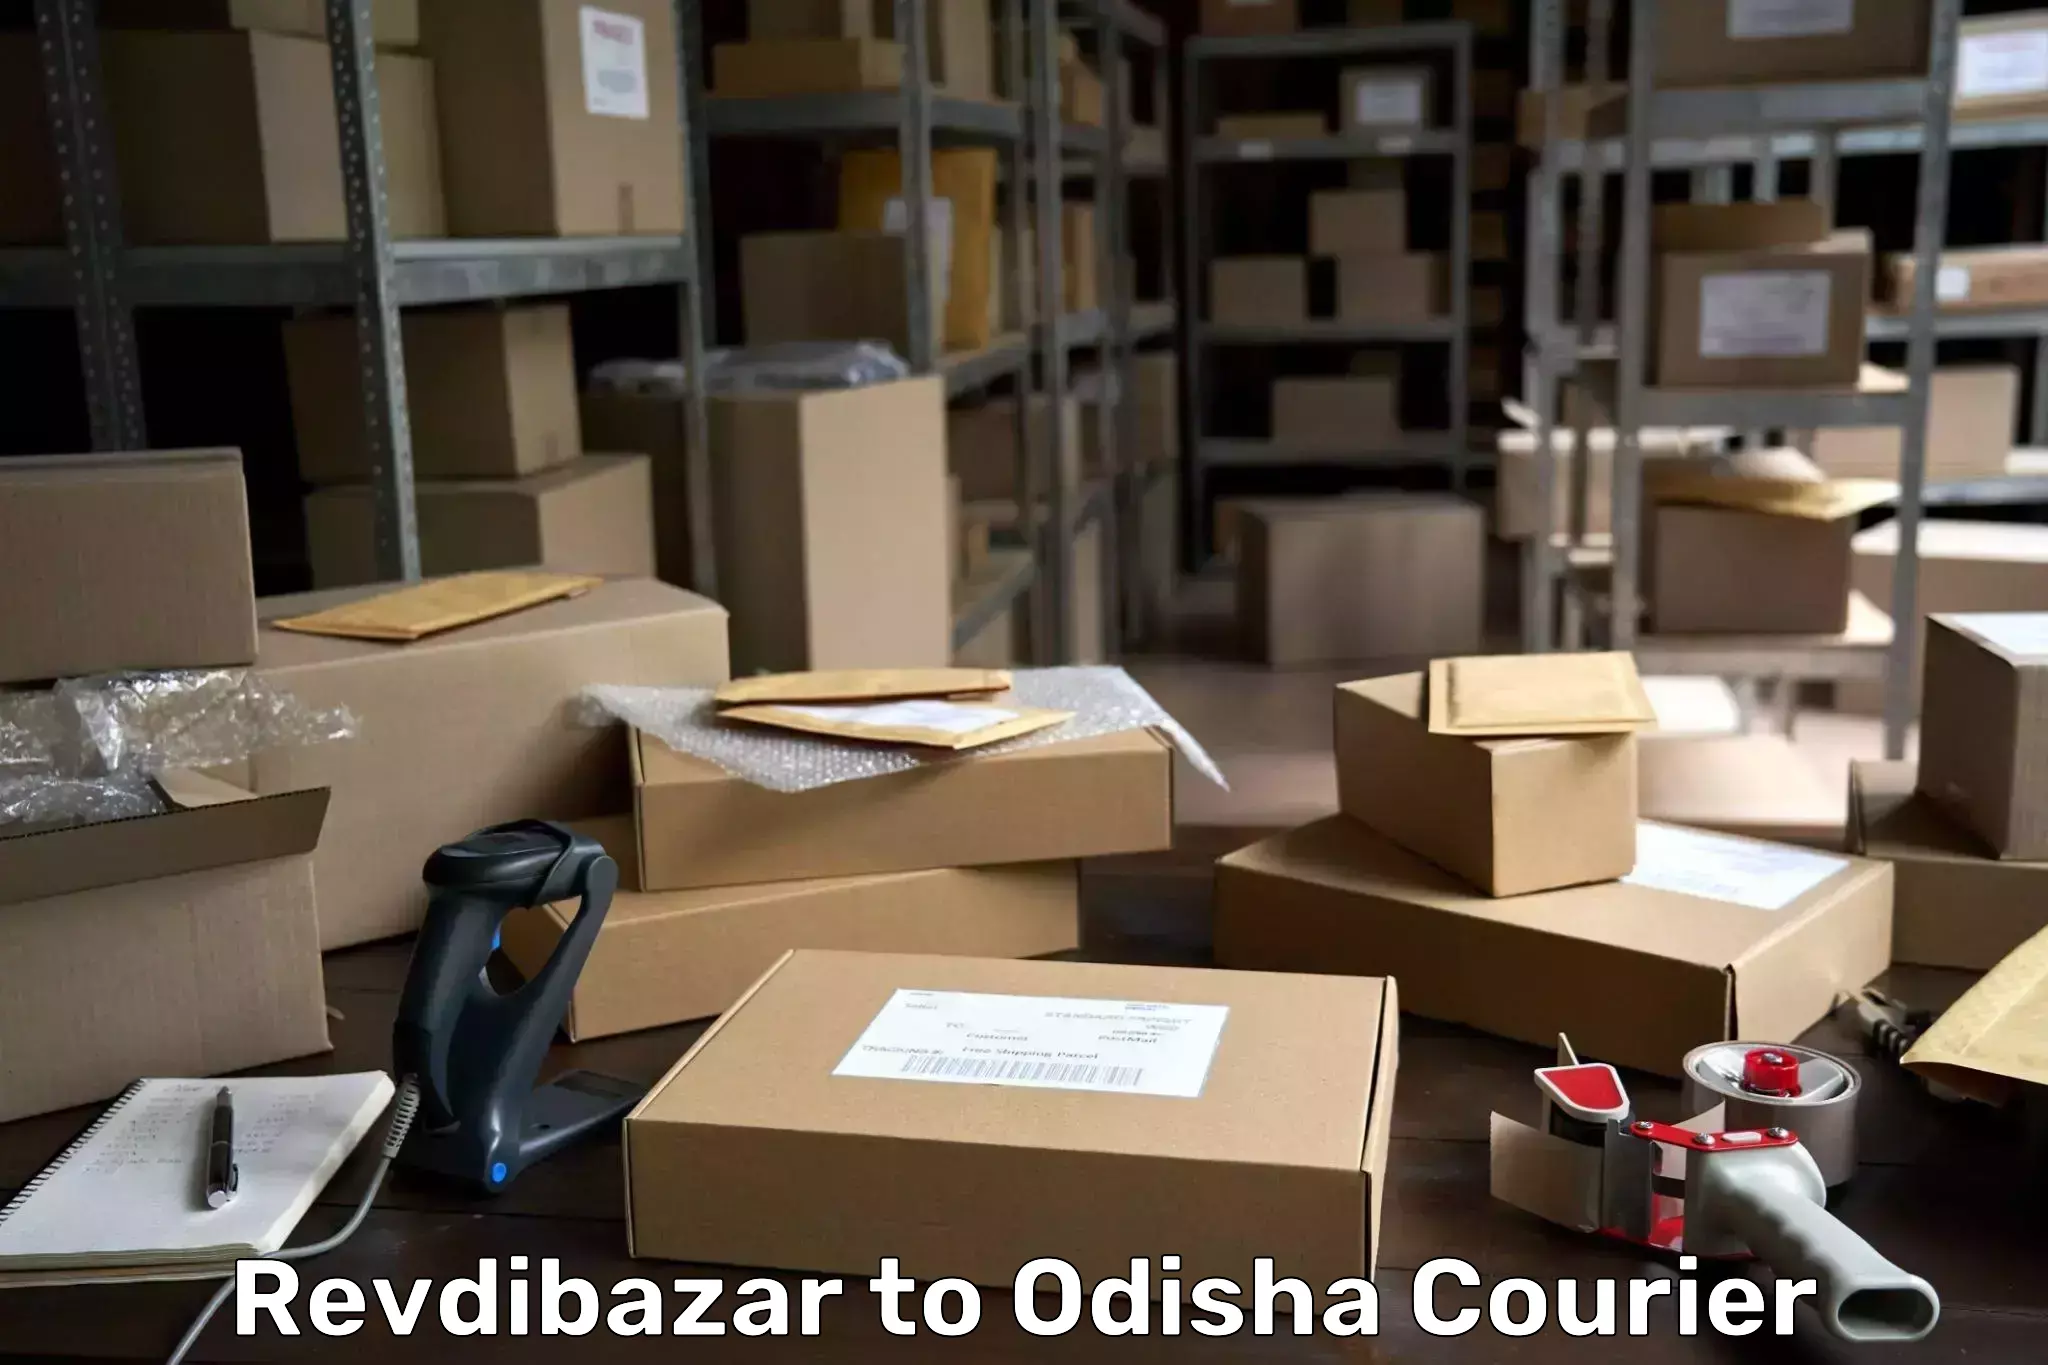 Courier service booking Revdibazar to Odisha